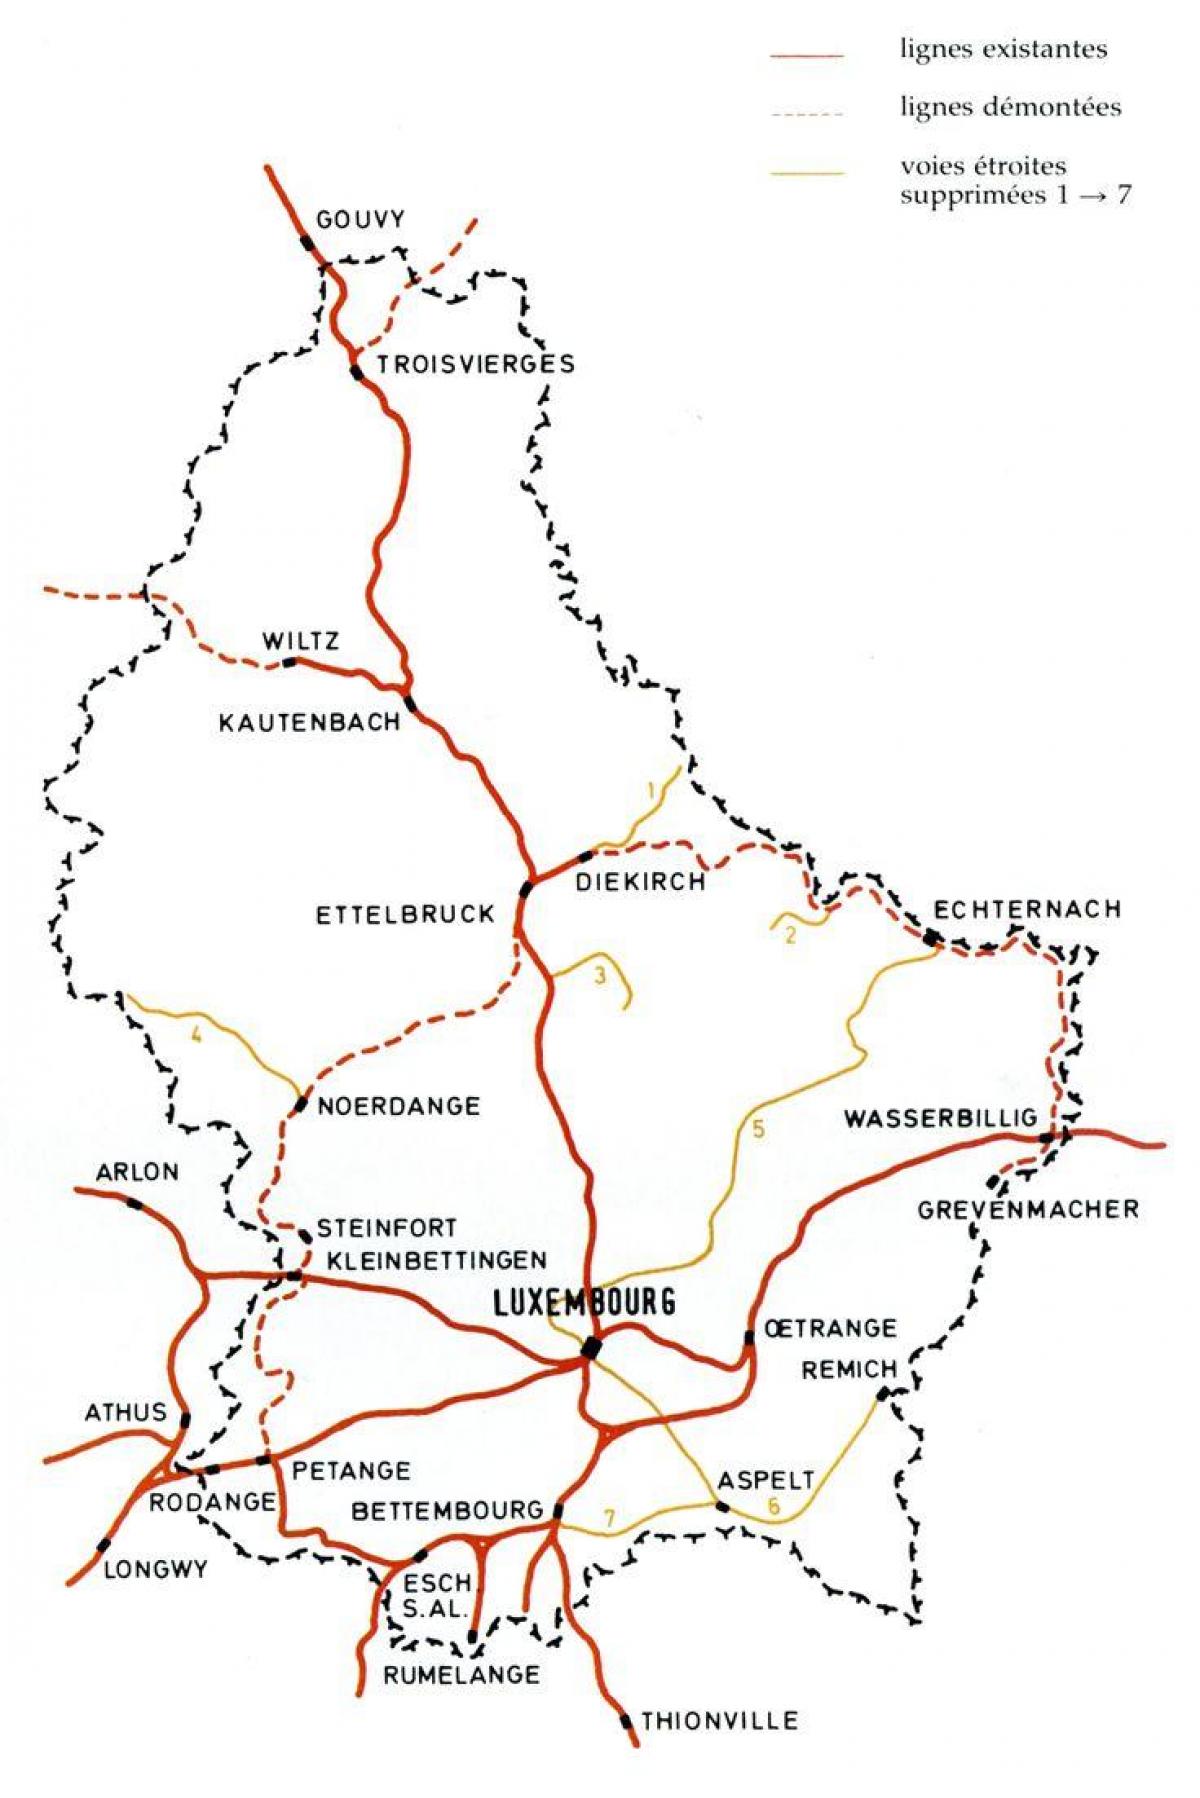 karta željezničkog kolodvora Luksemburga